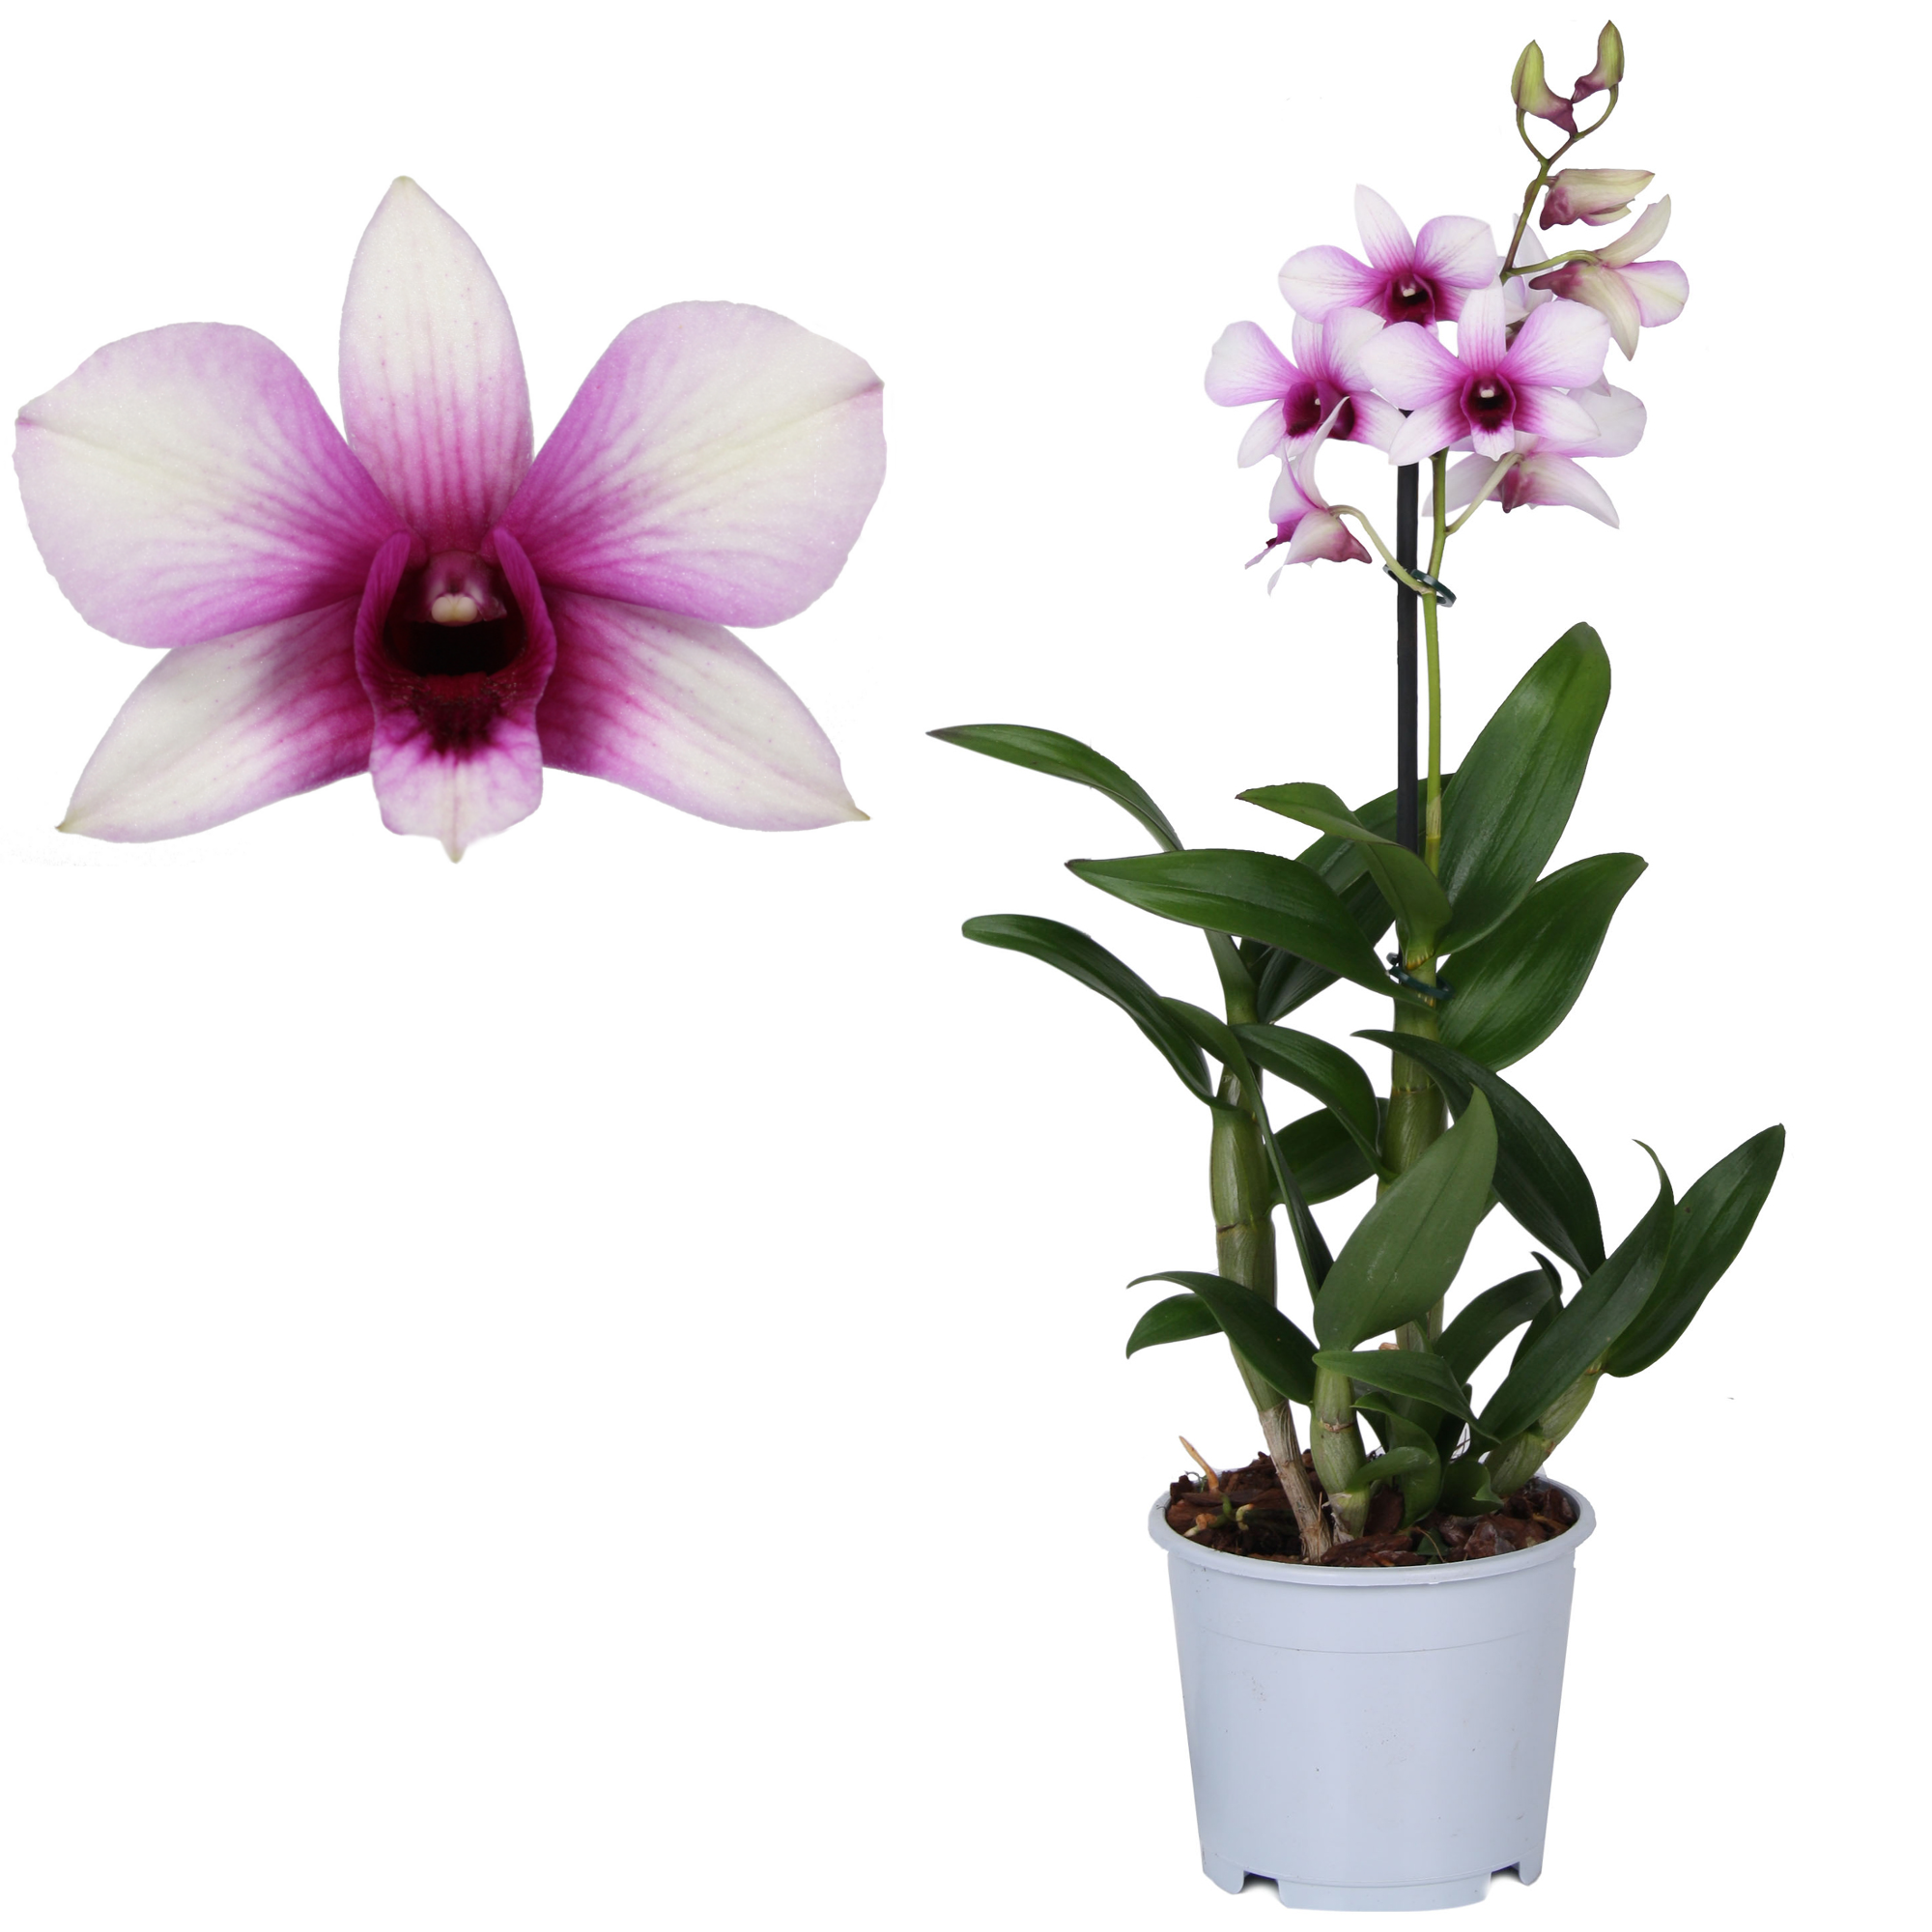 Dendrobium-Orchidee \'Polar Fire\' 1 Rispe weiß/violett 12 cm Topf